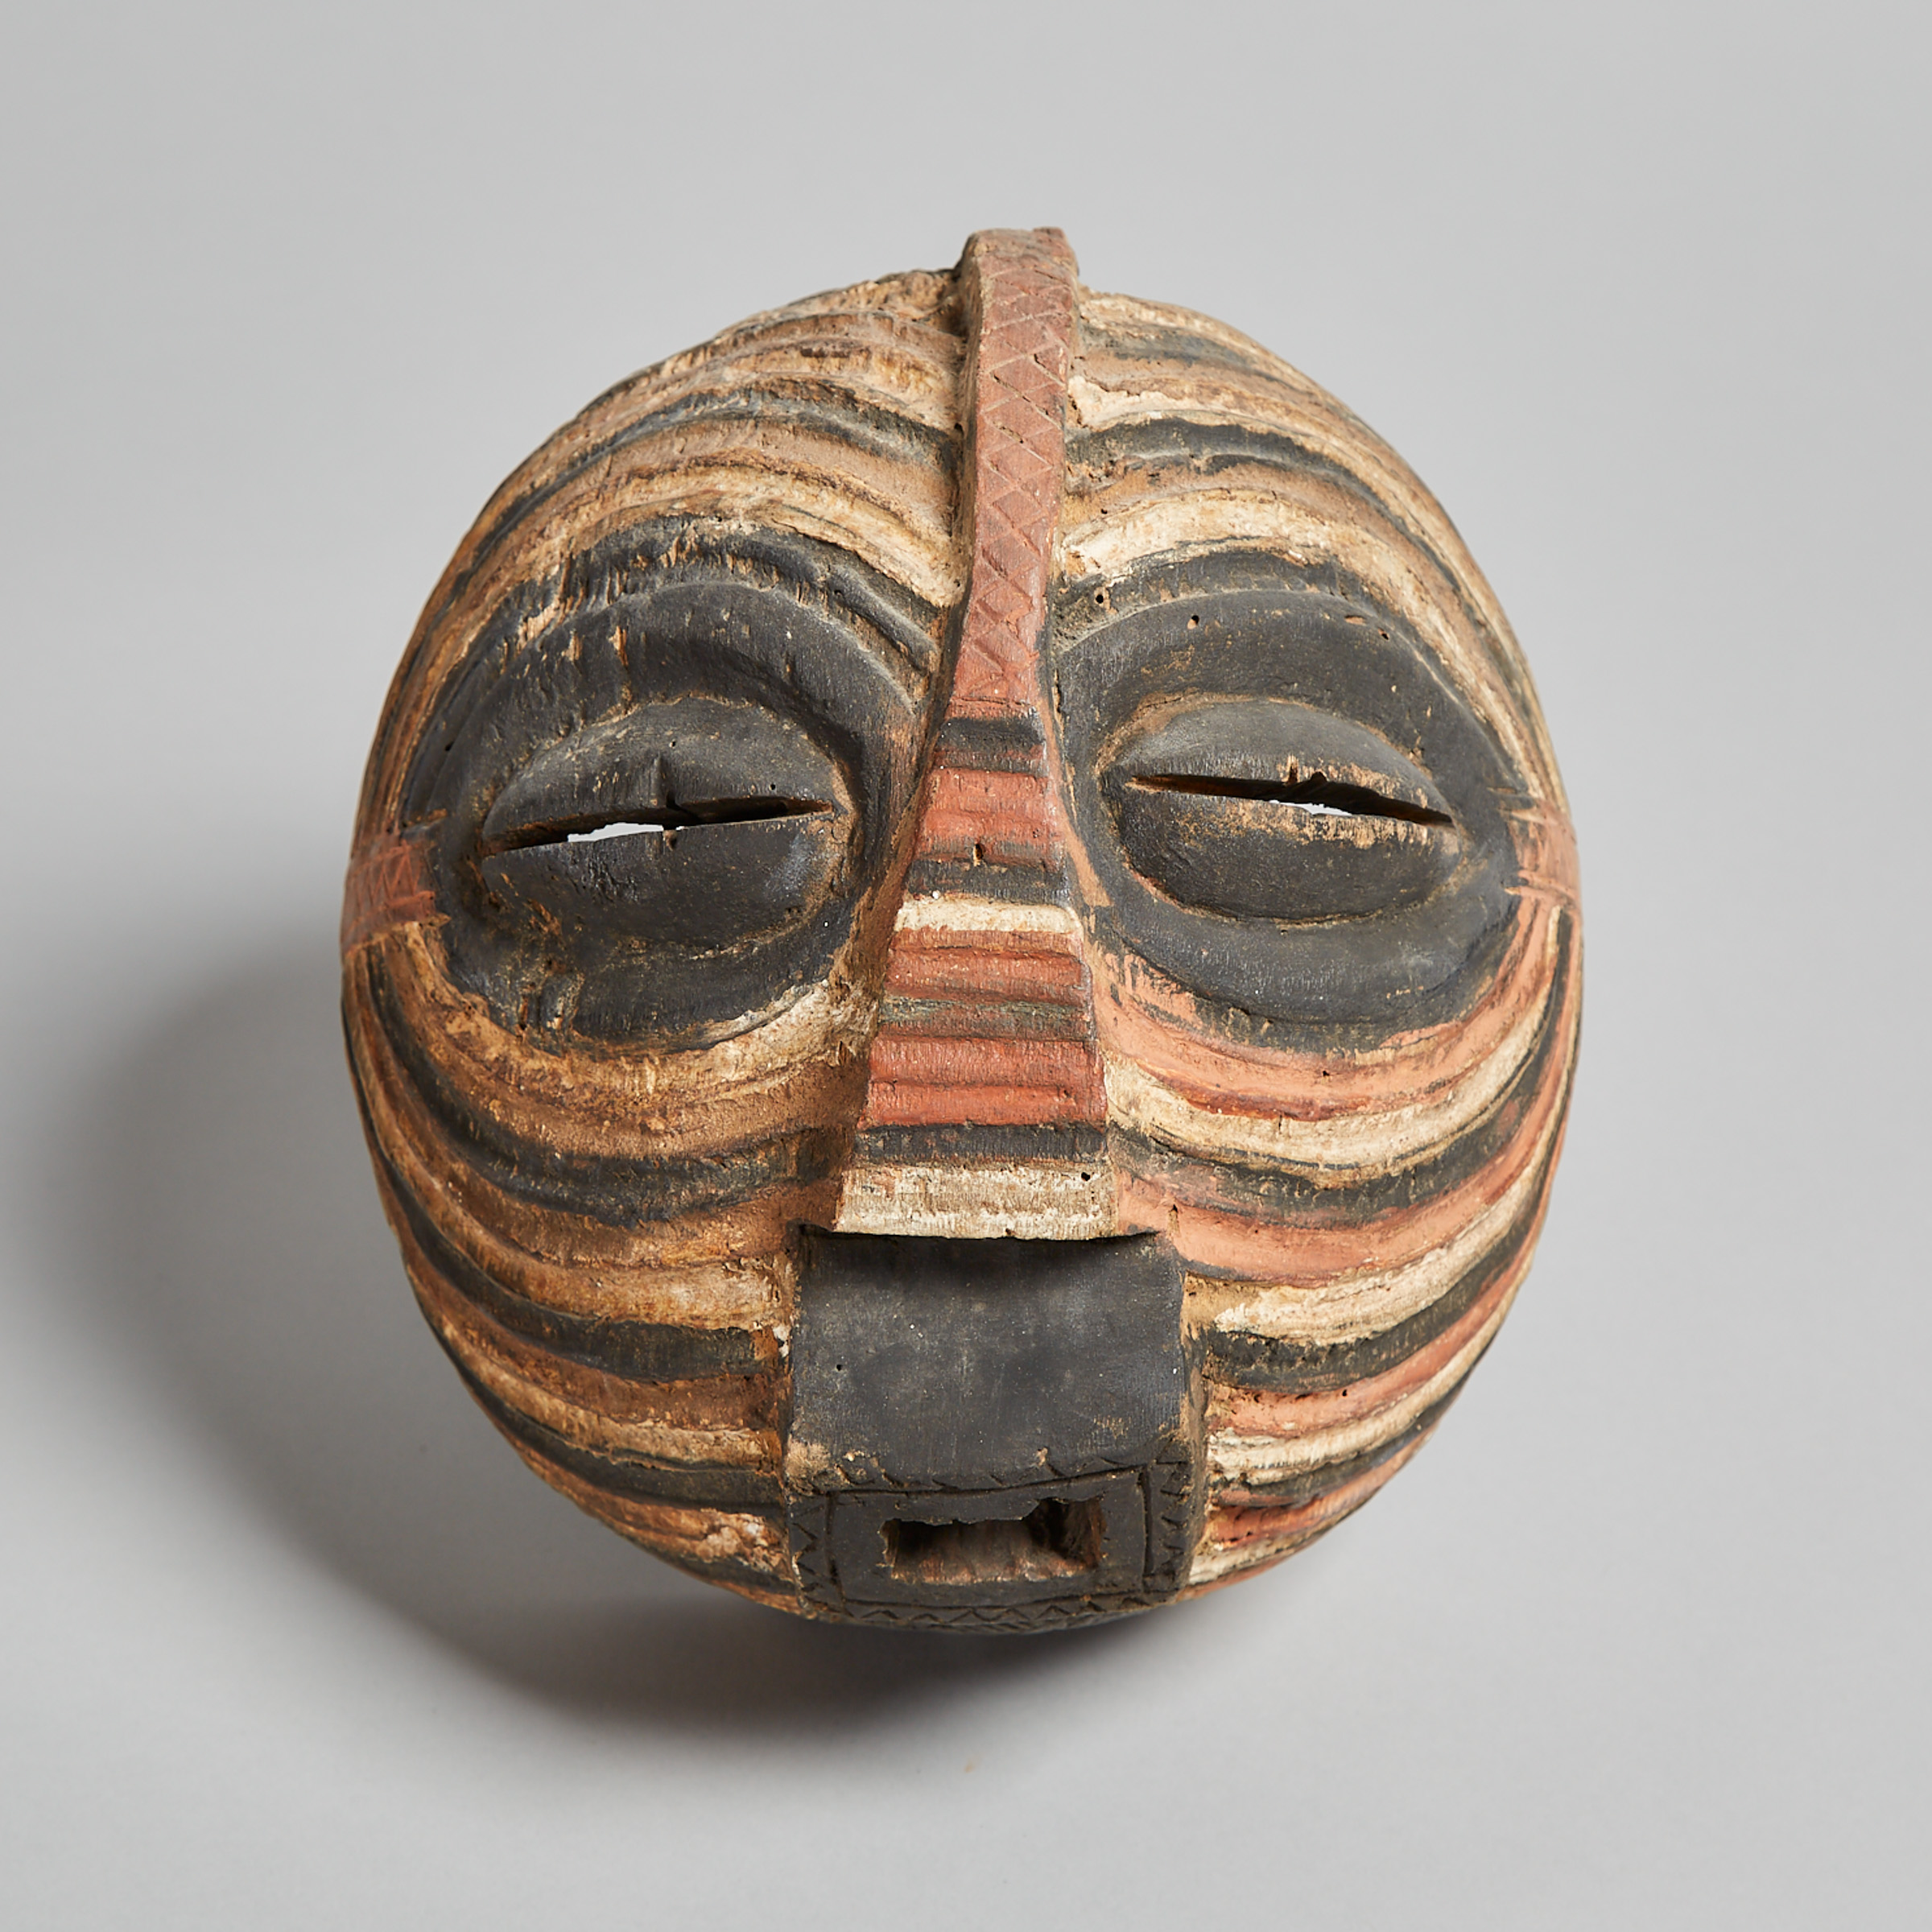 Luba Kifwebe Mask, Democratic Republic of Congo, Central Africa